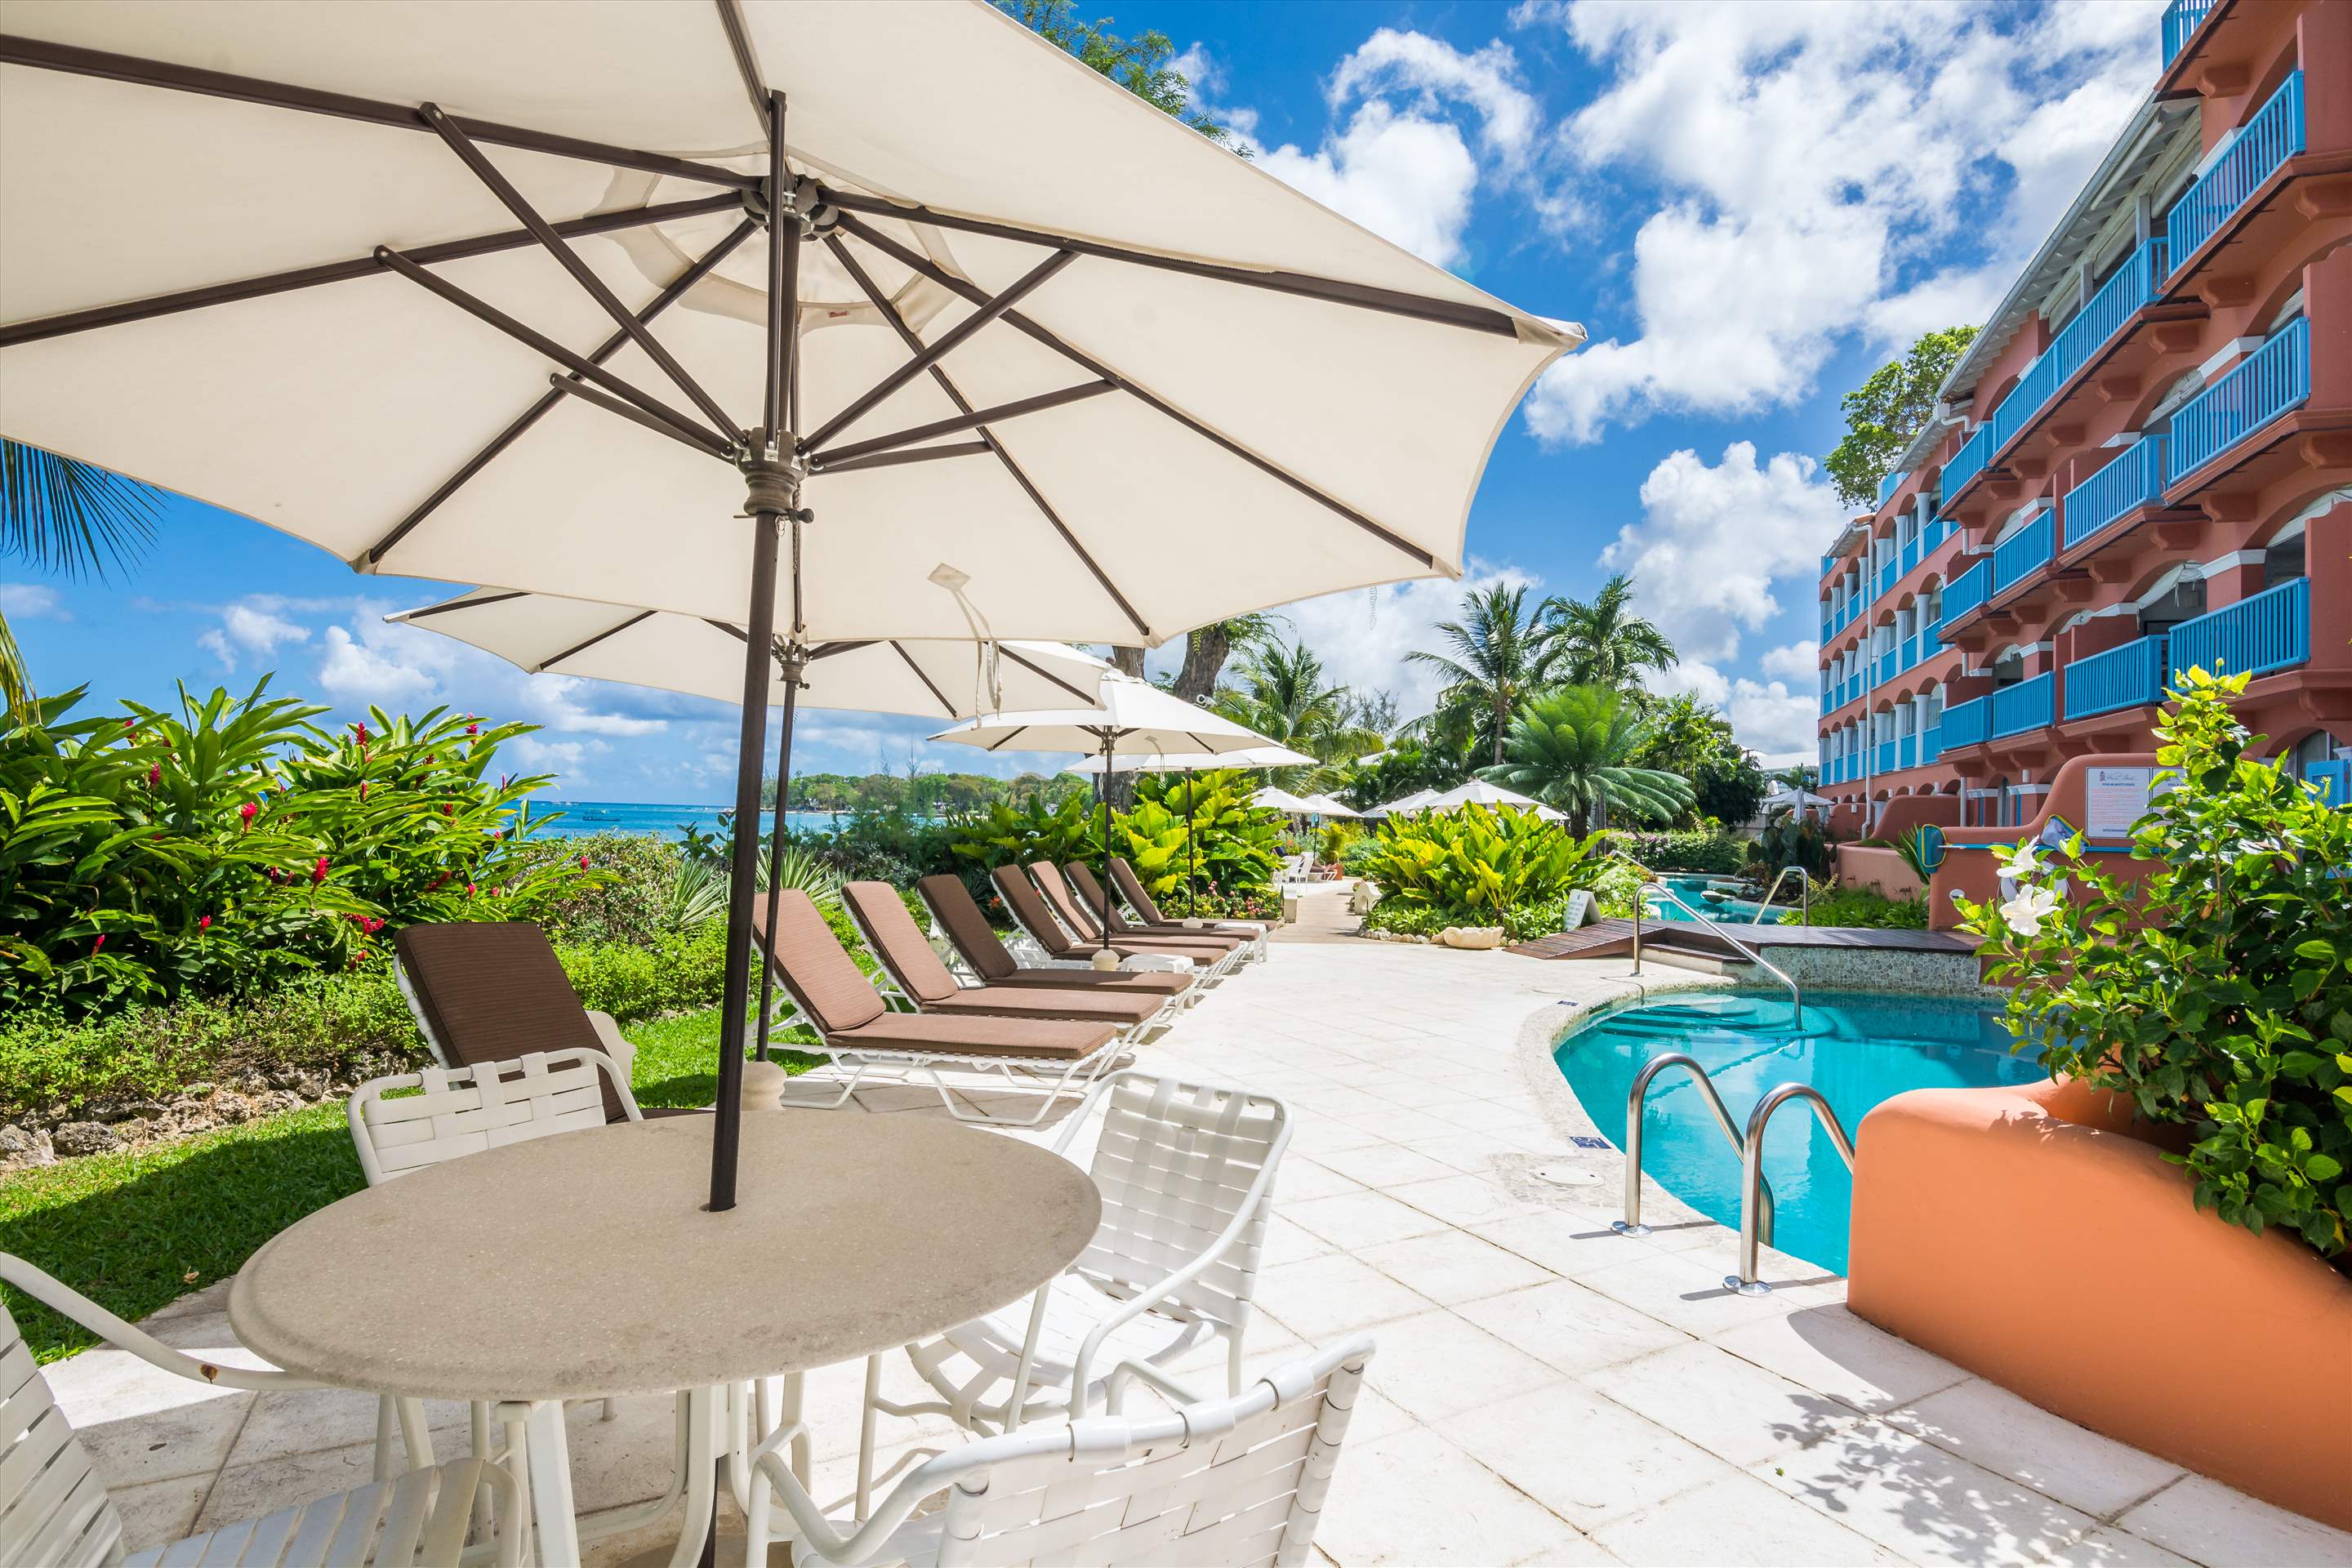 Villas on the Beach 201 , 2 bedroom, 2 bedroom apartment in St. James & West Coast, Barbados Photo #6